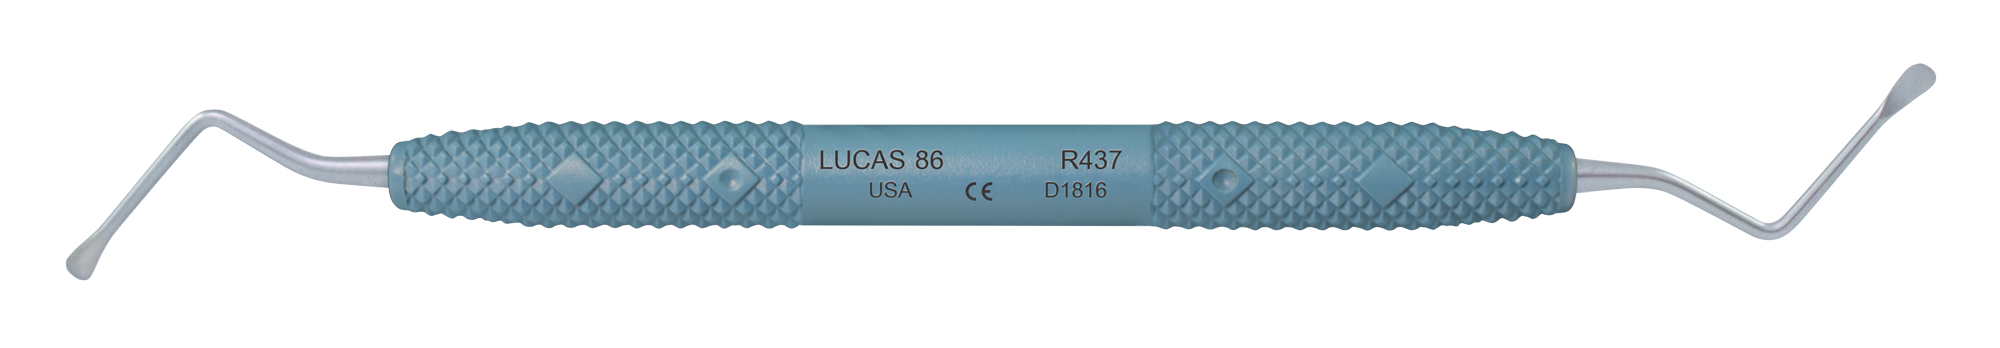 PDT Lucas 86 Instrument